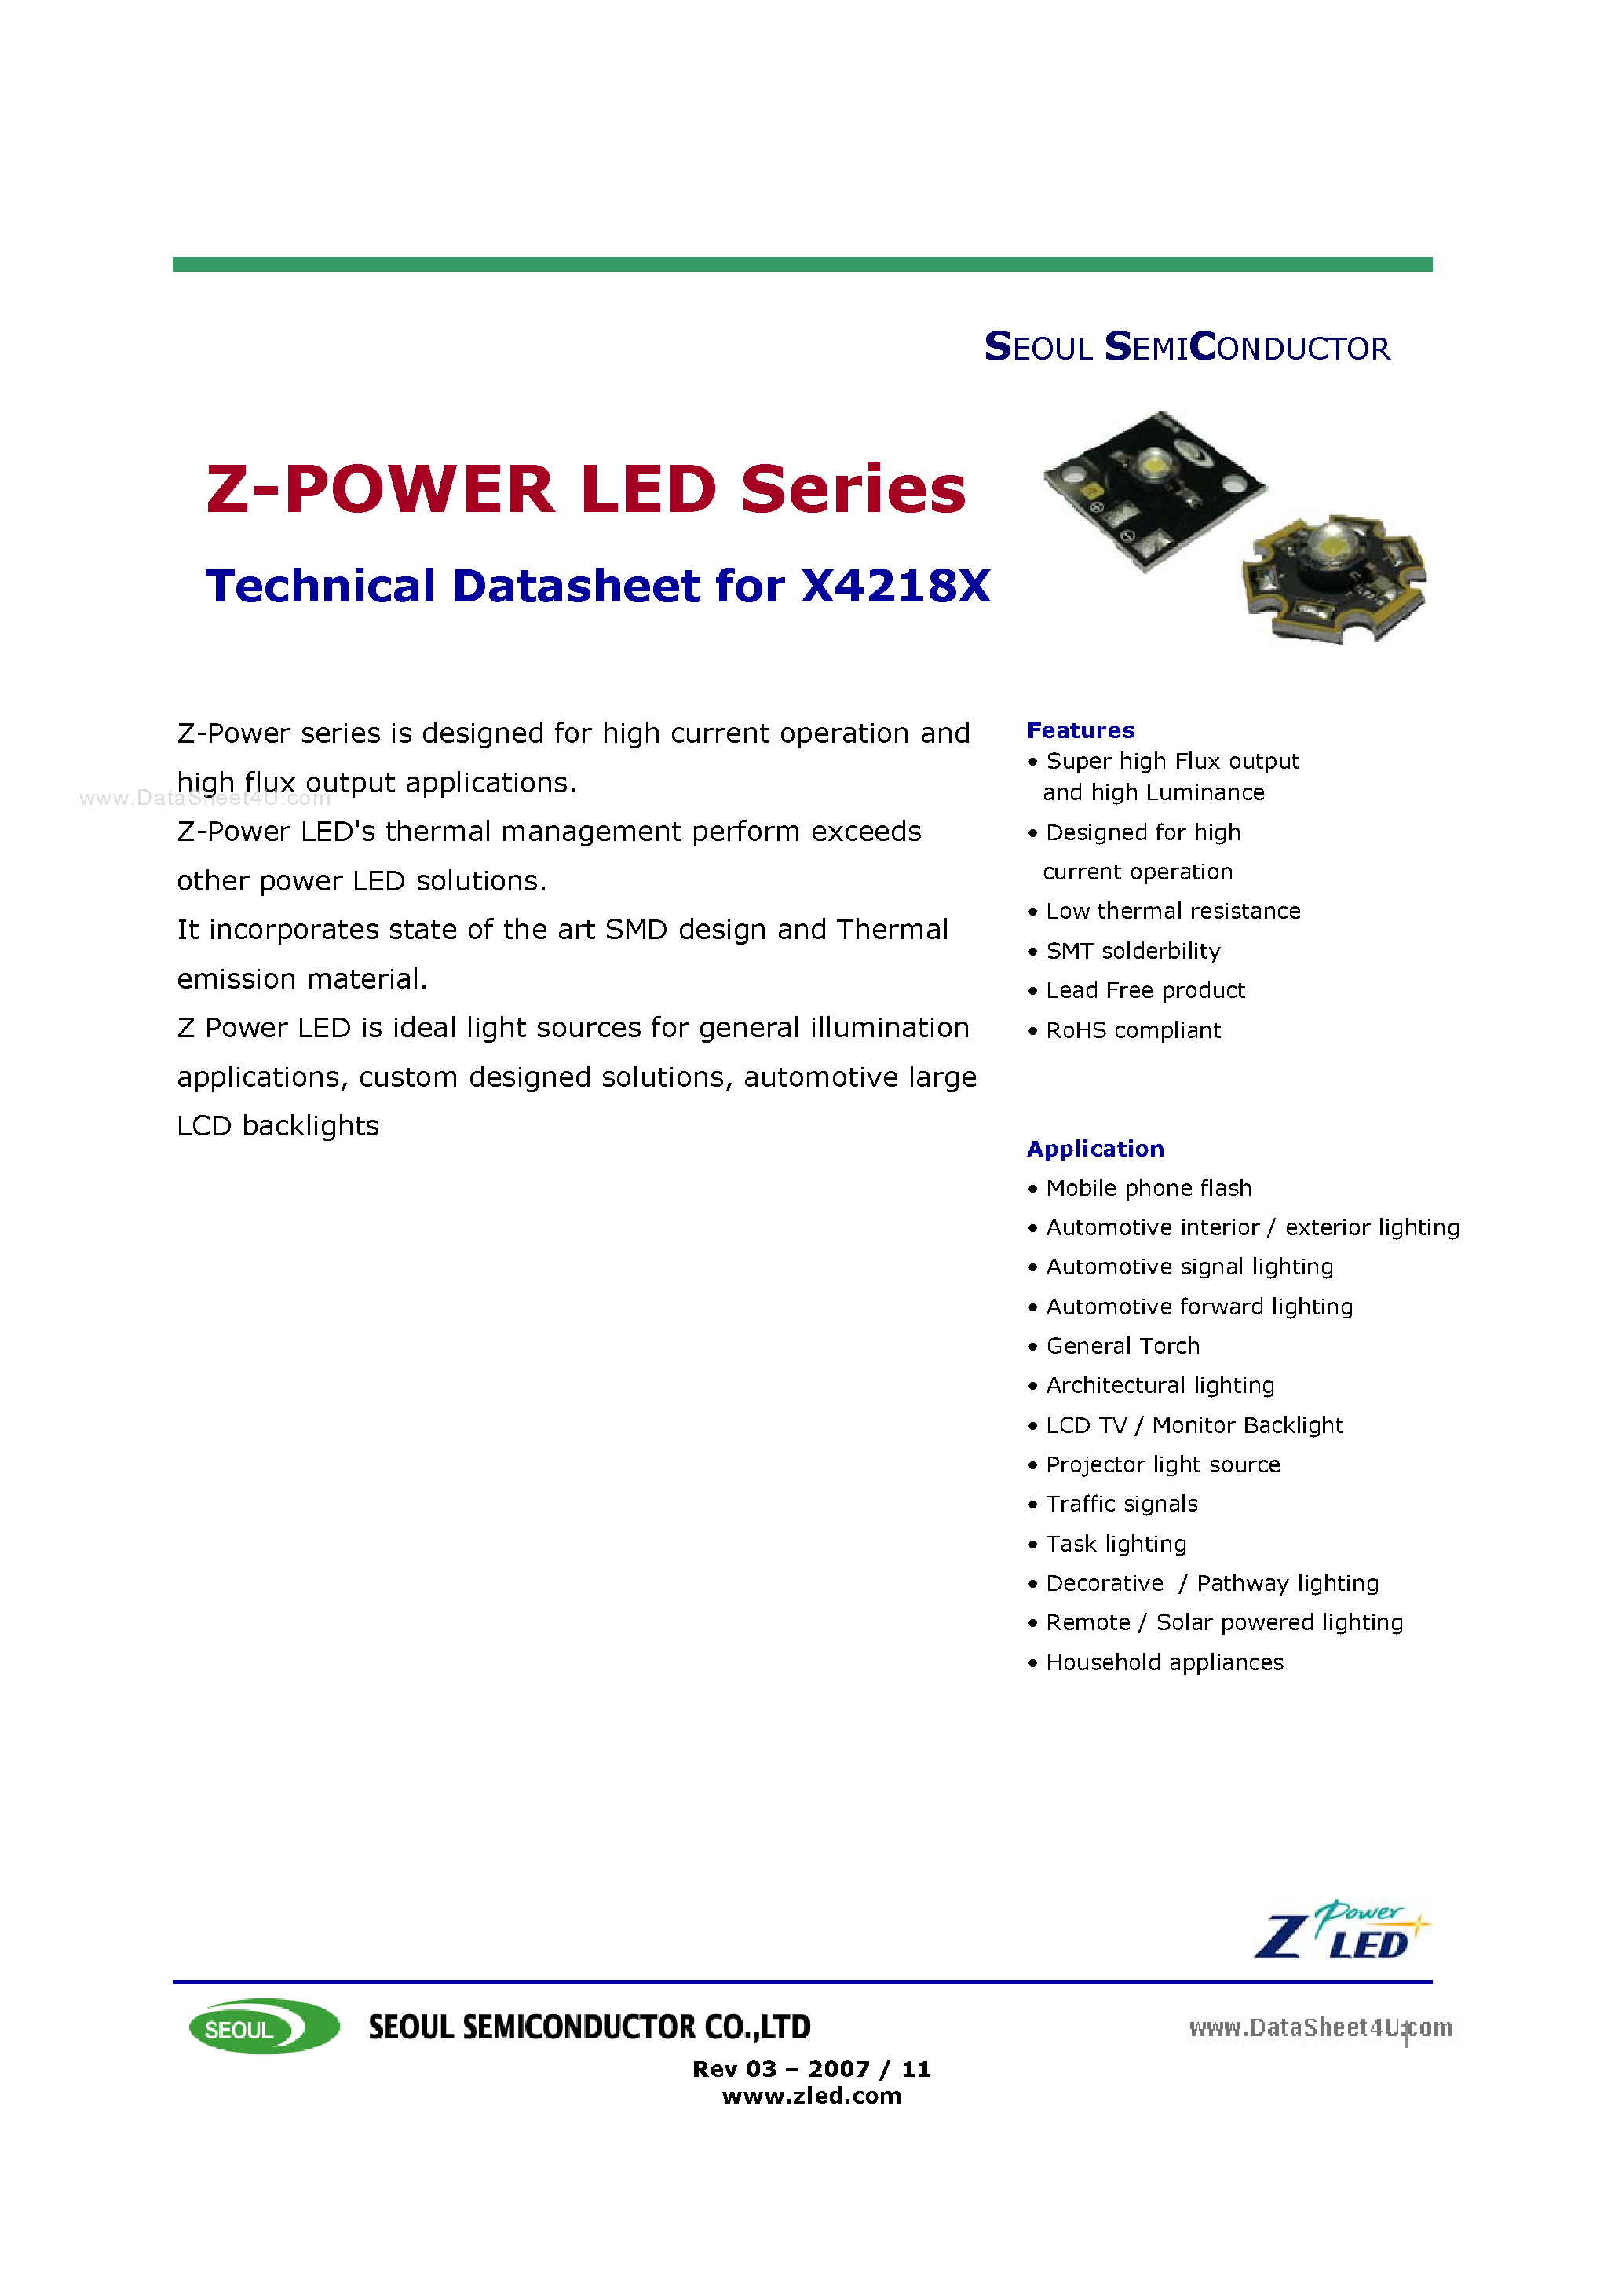 Даташит W4218x - Z-POWER LED страница 1